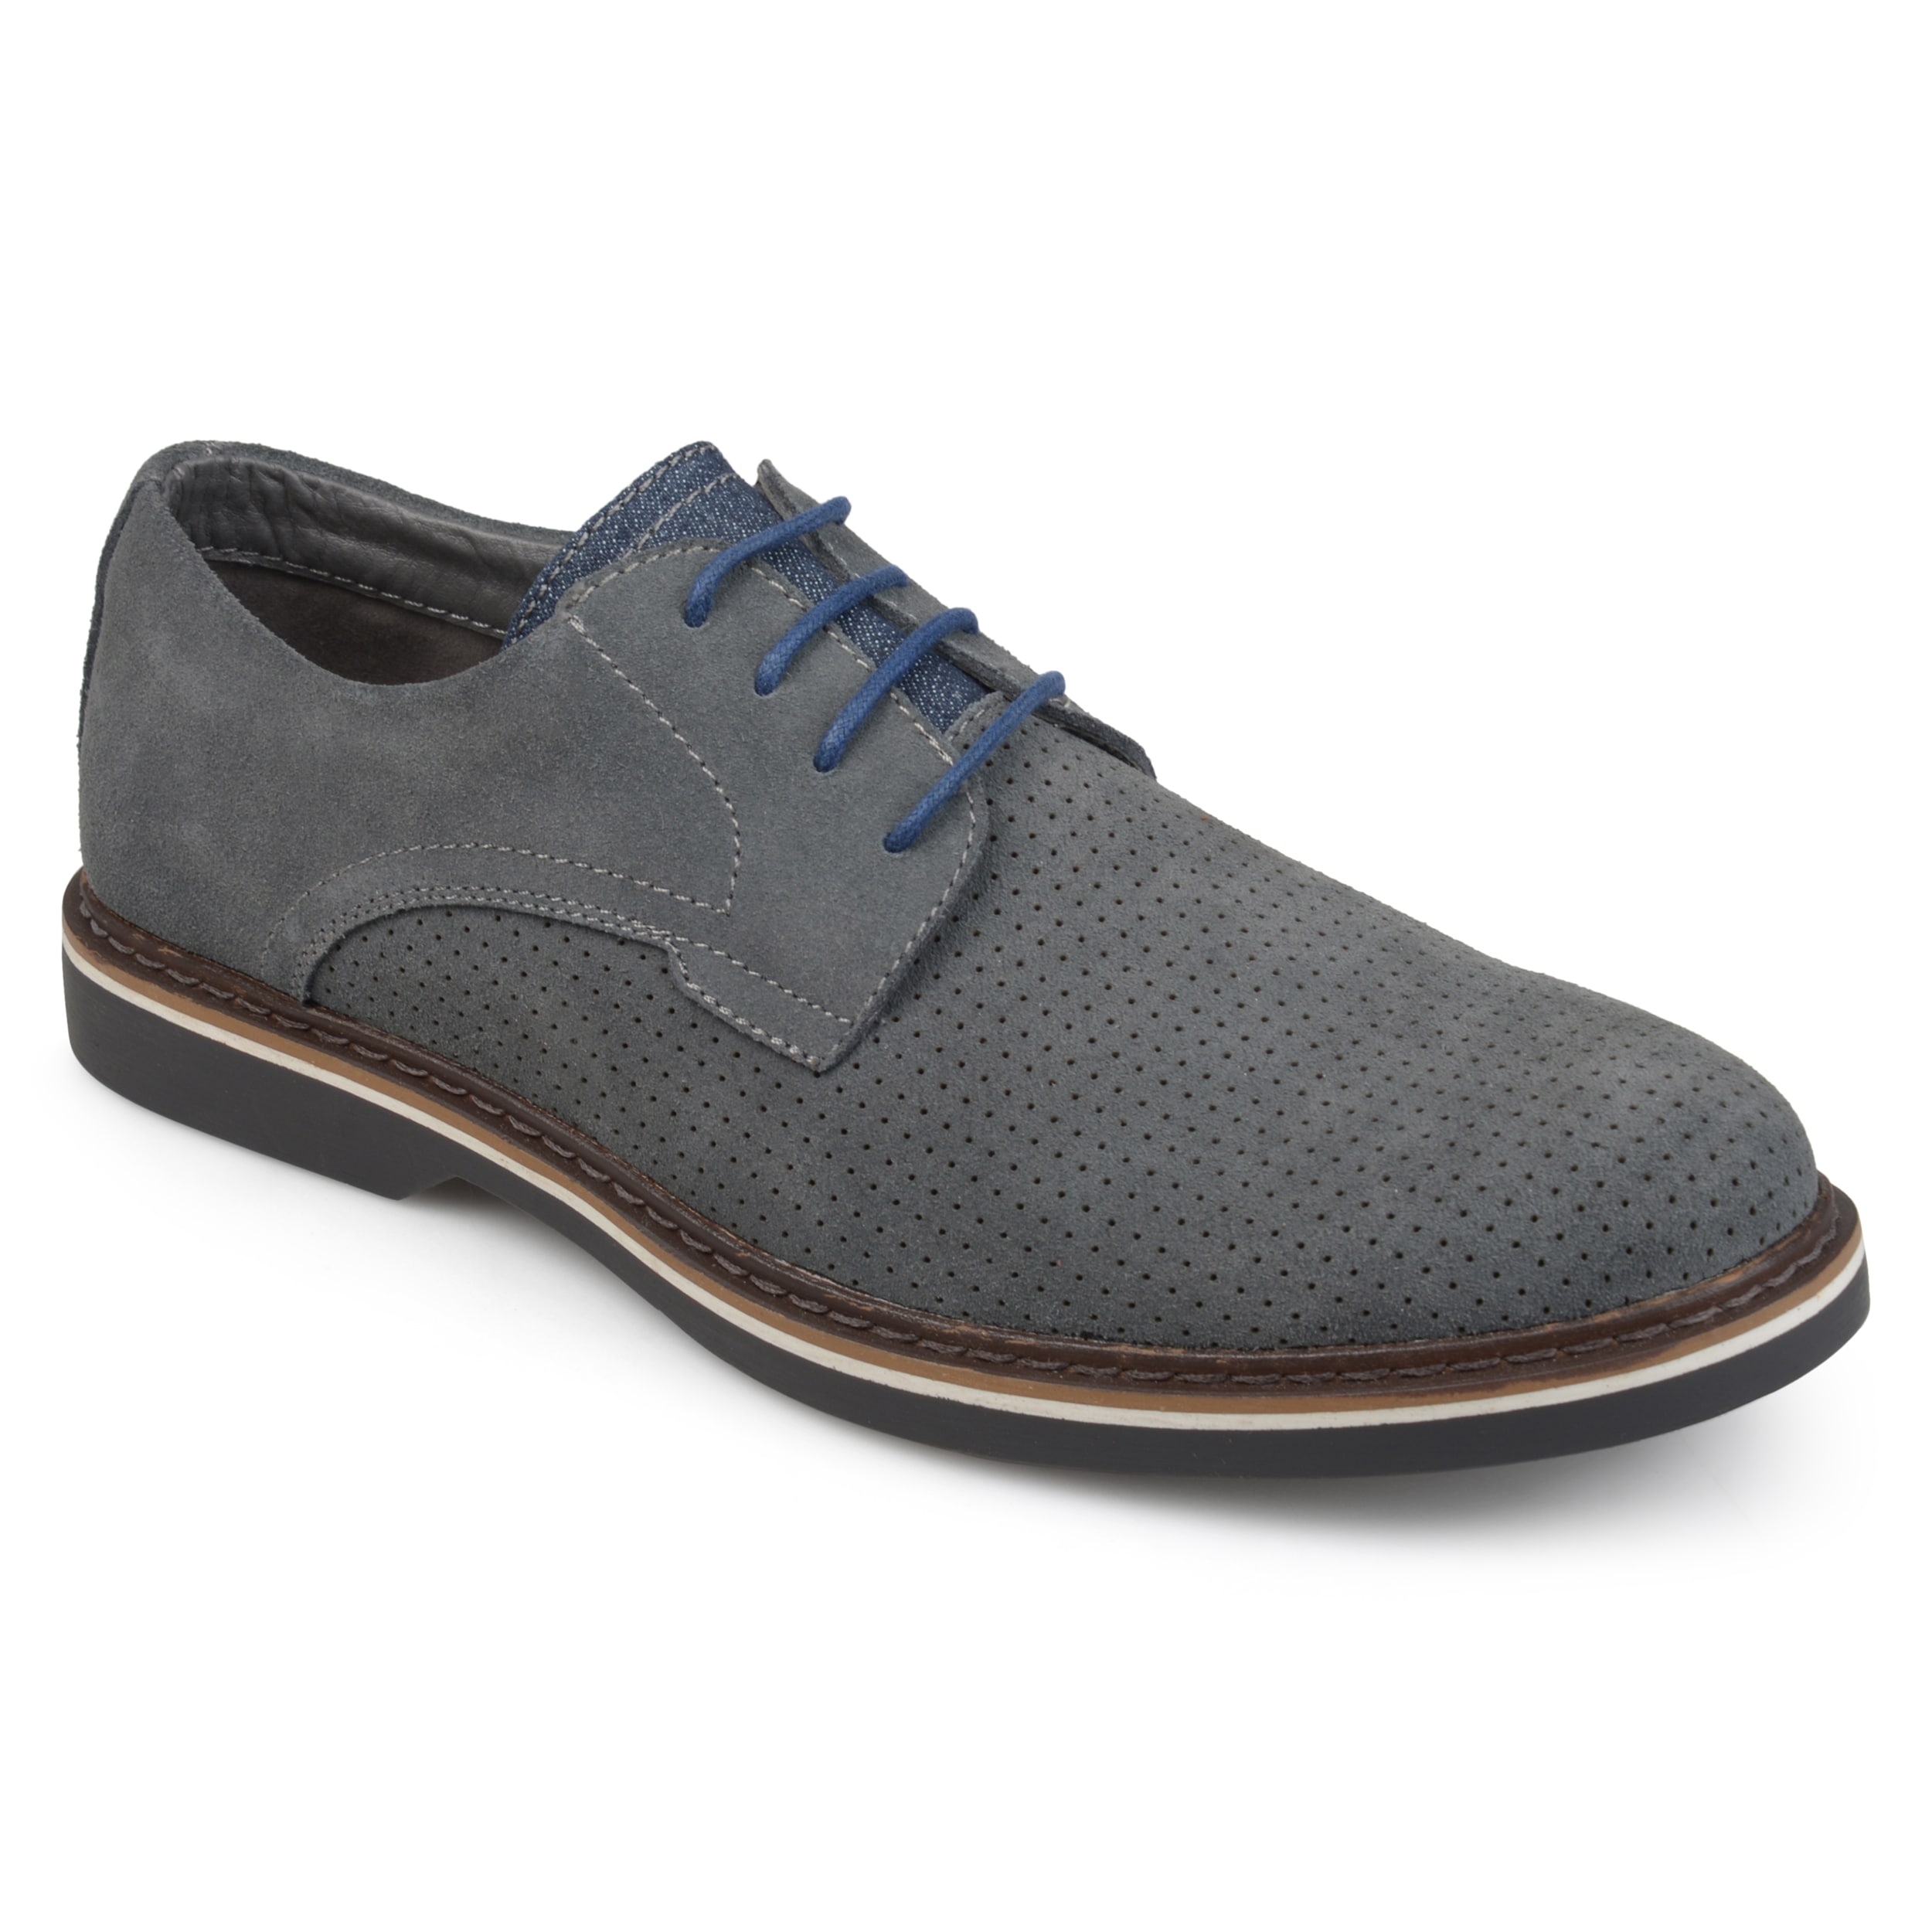 grey suede dress shoes mens